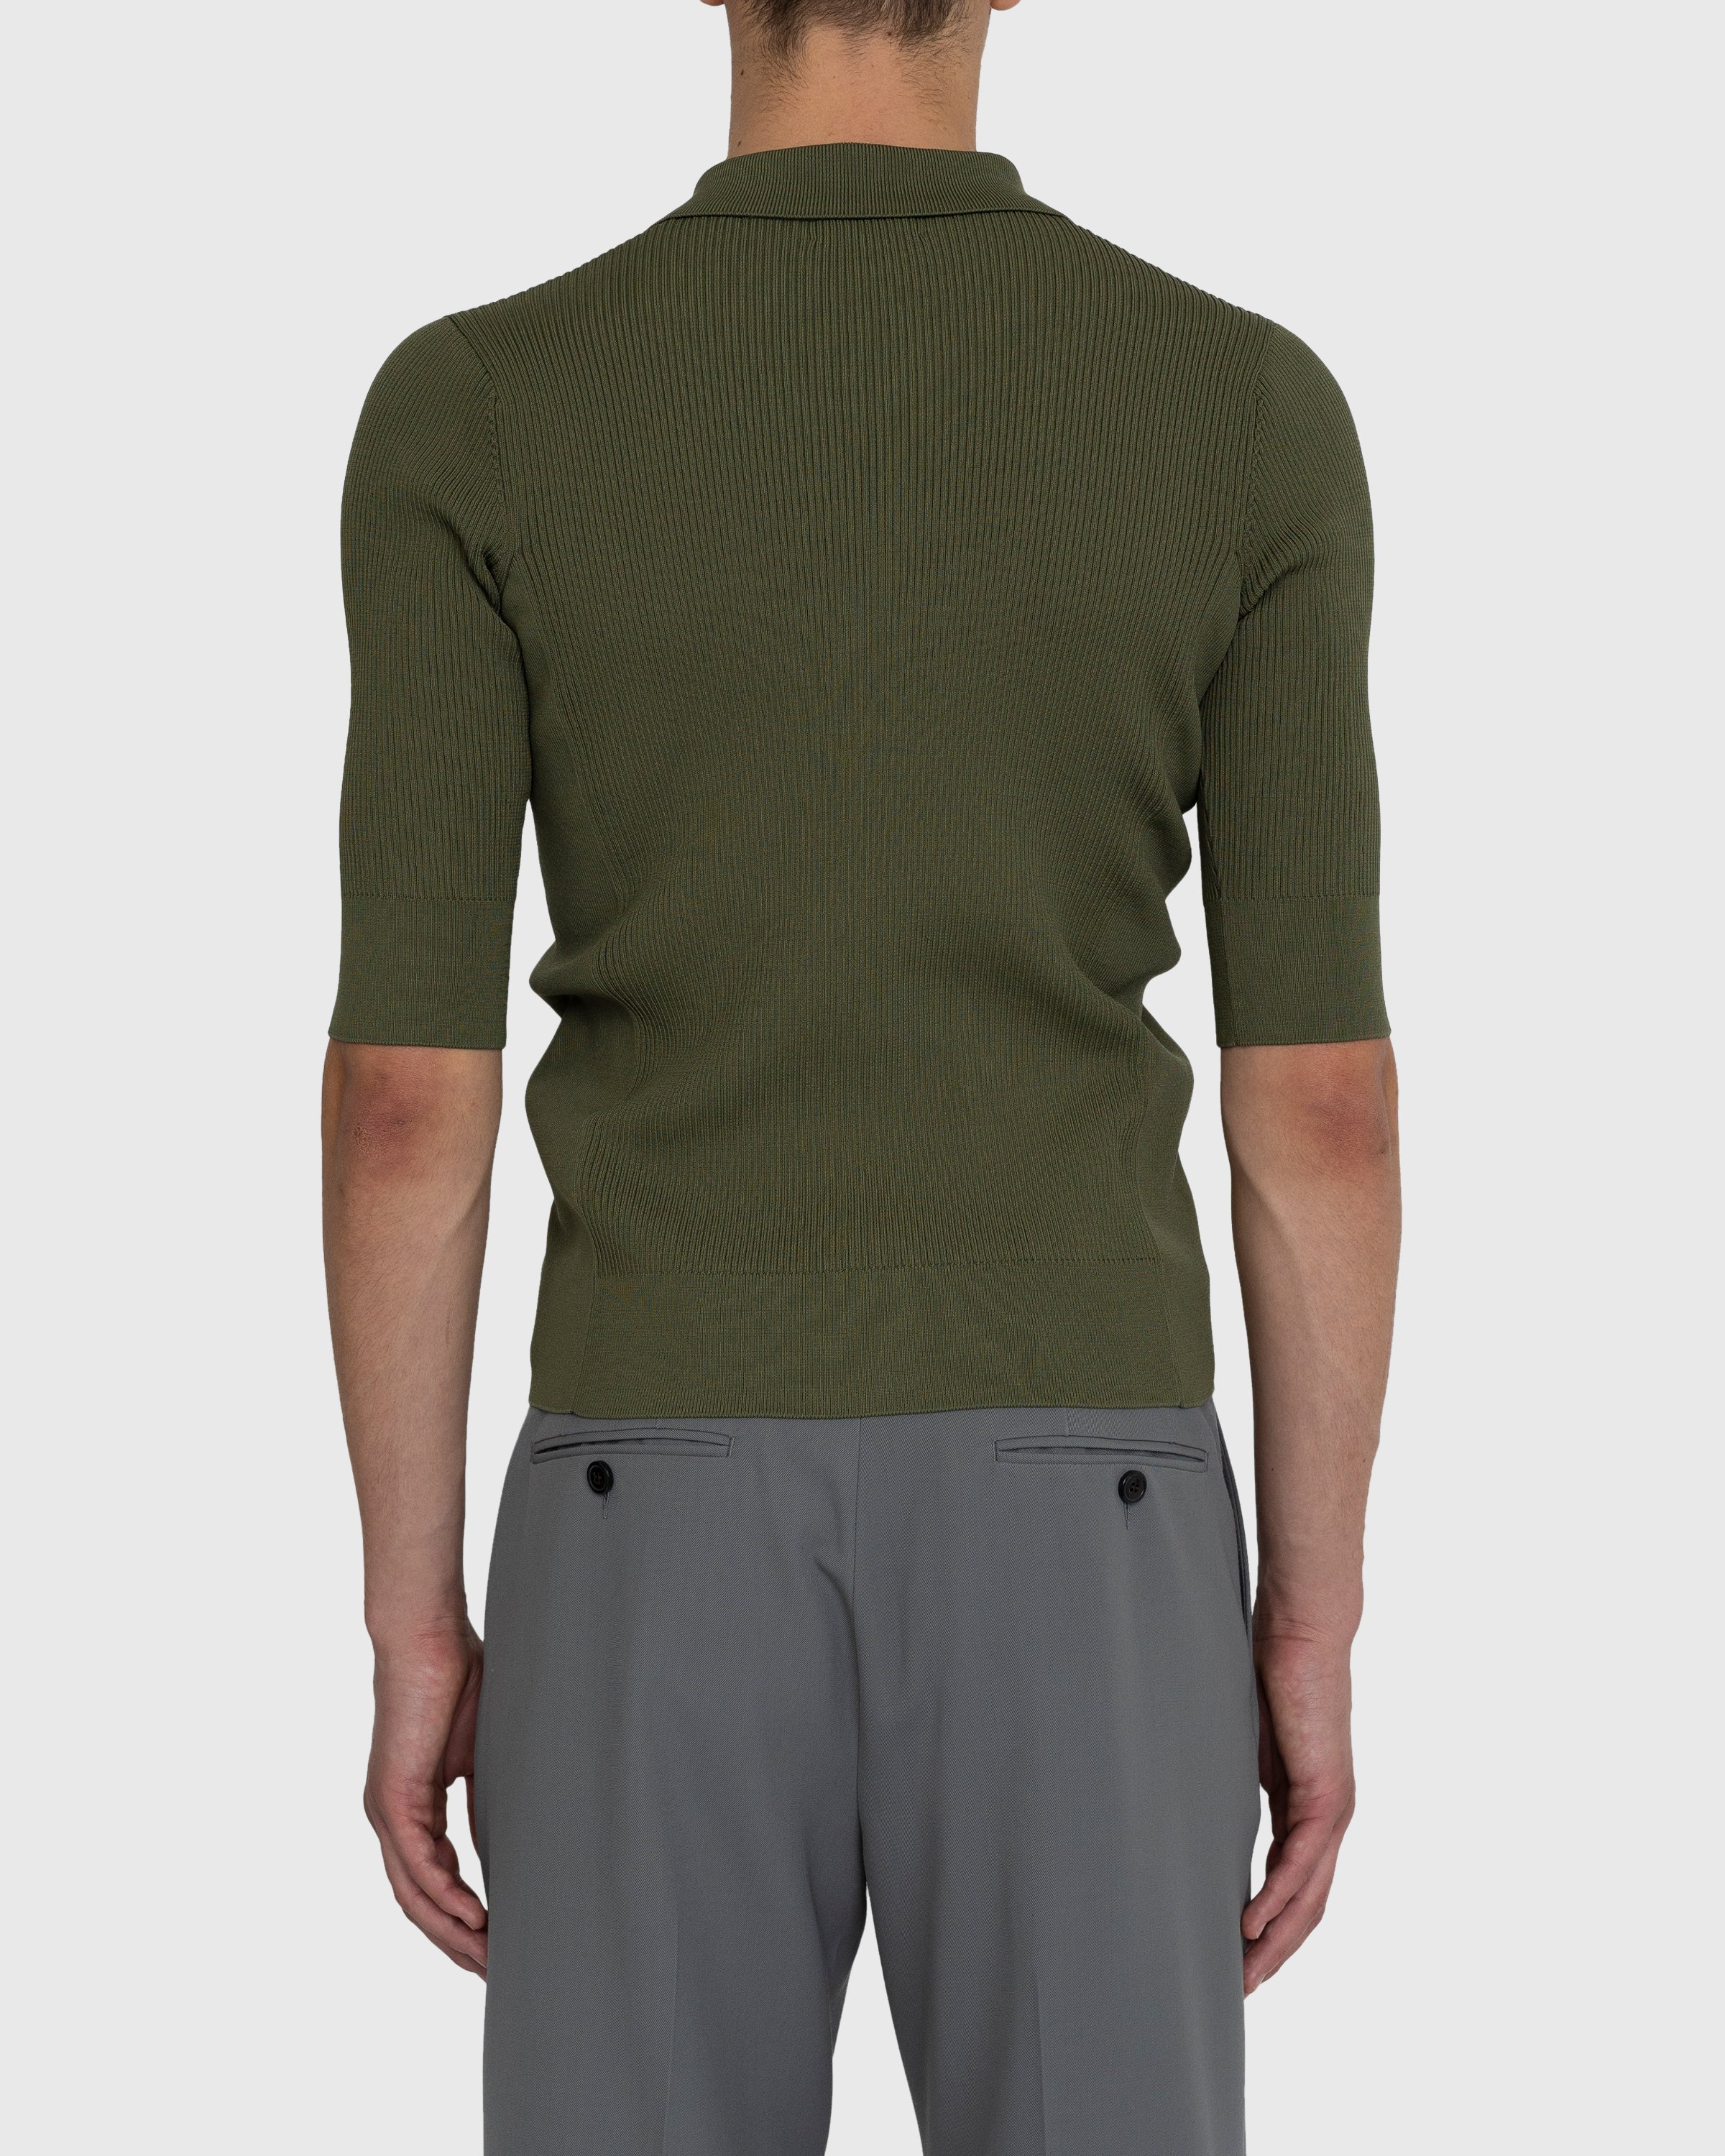 Dries van Noten - Neil Sweater - Clothing - Green - Image 4